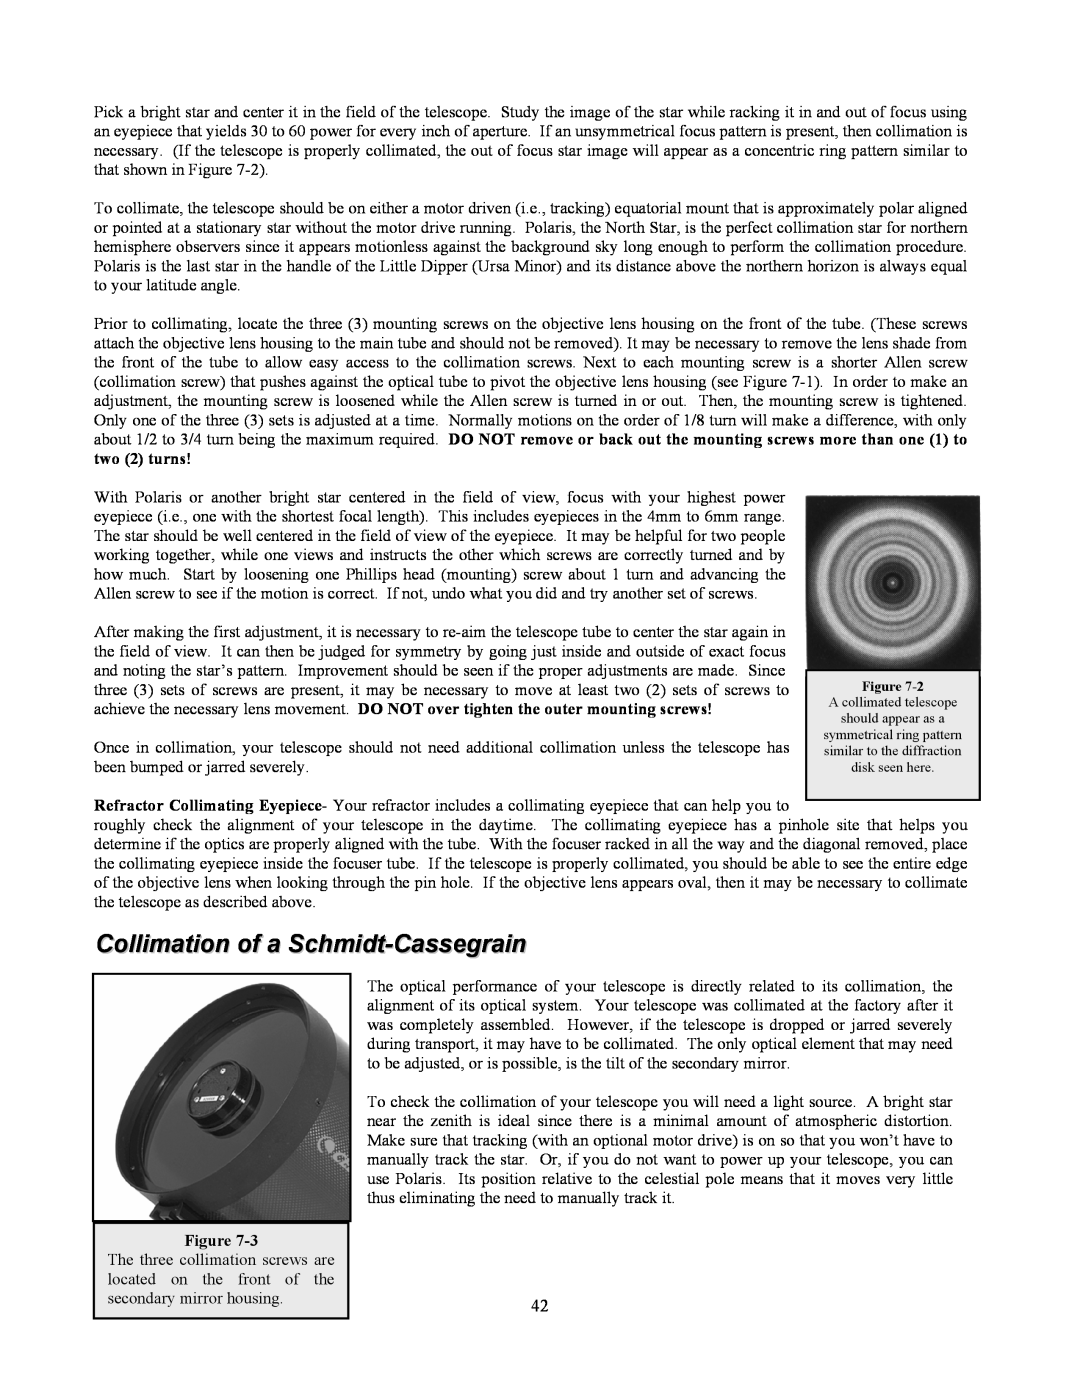 Celestron OMNI XLT 102 manual Collimation of a Schmidt-Cassegrain, two 2 turns 